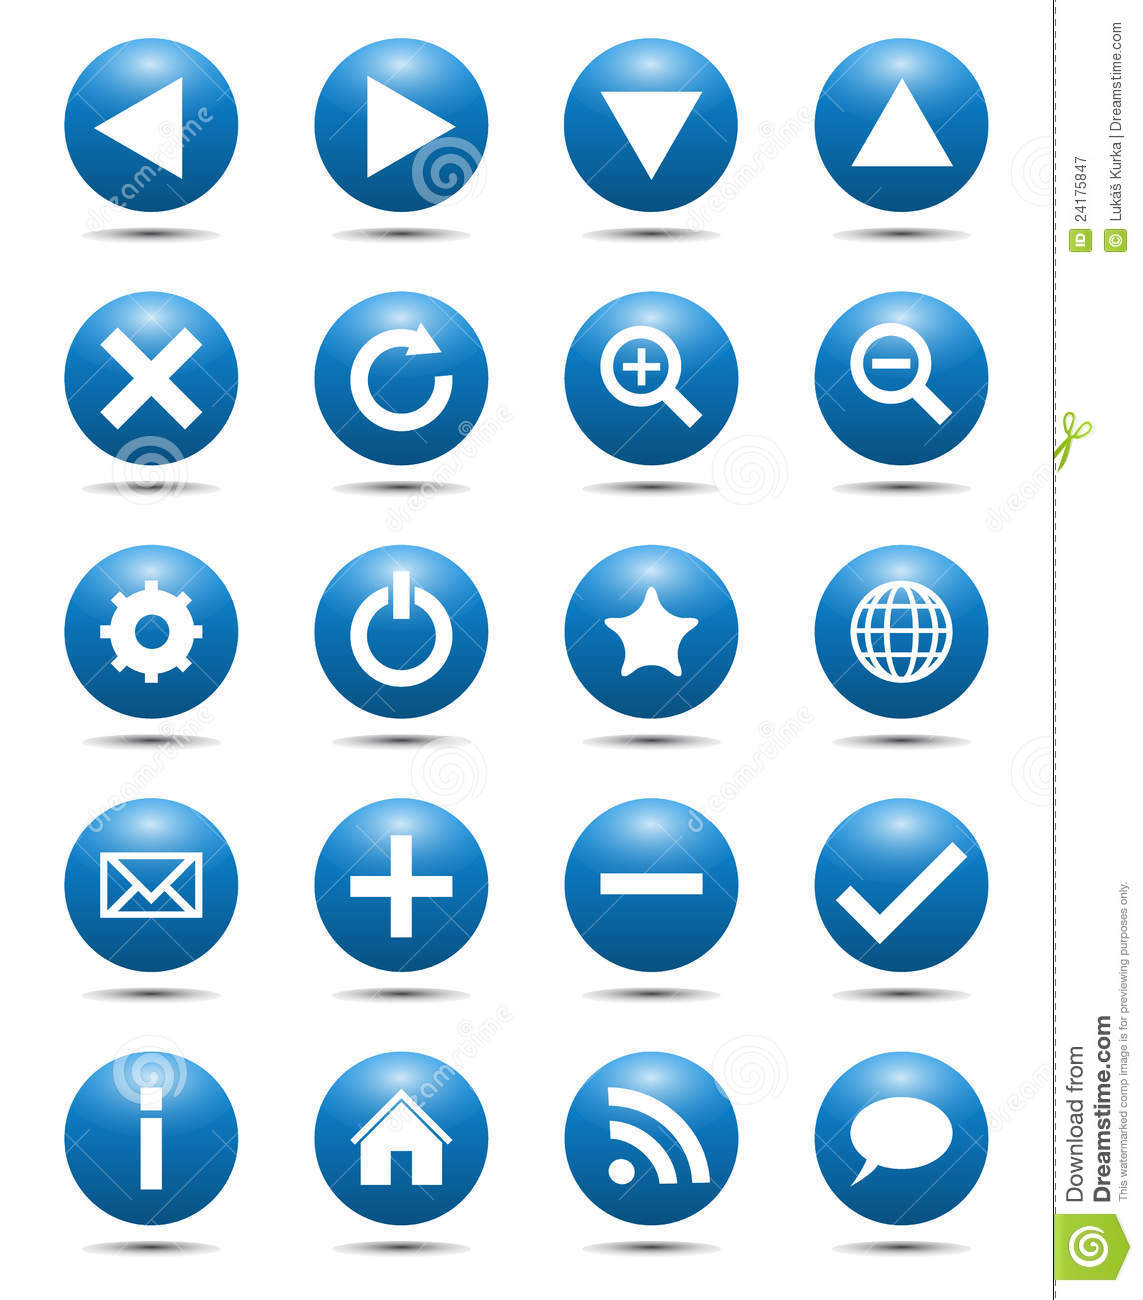 Free Web Navigation Icons